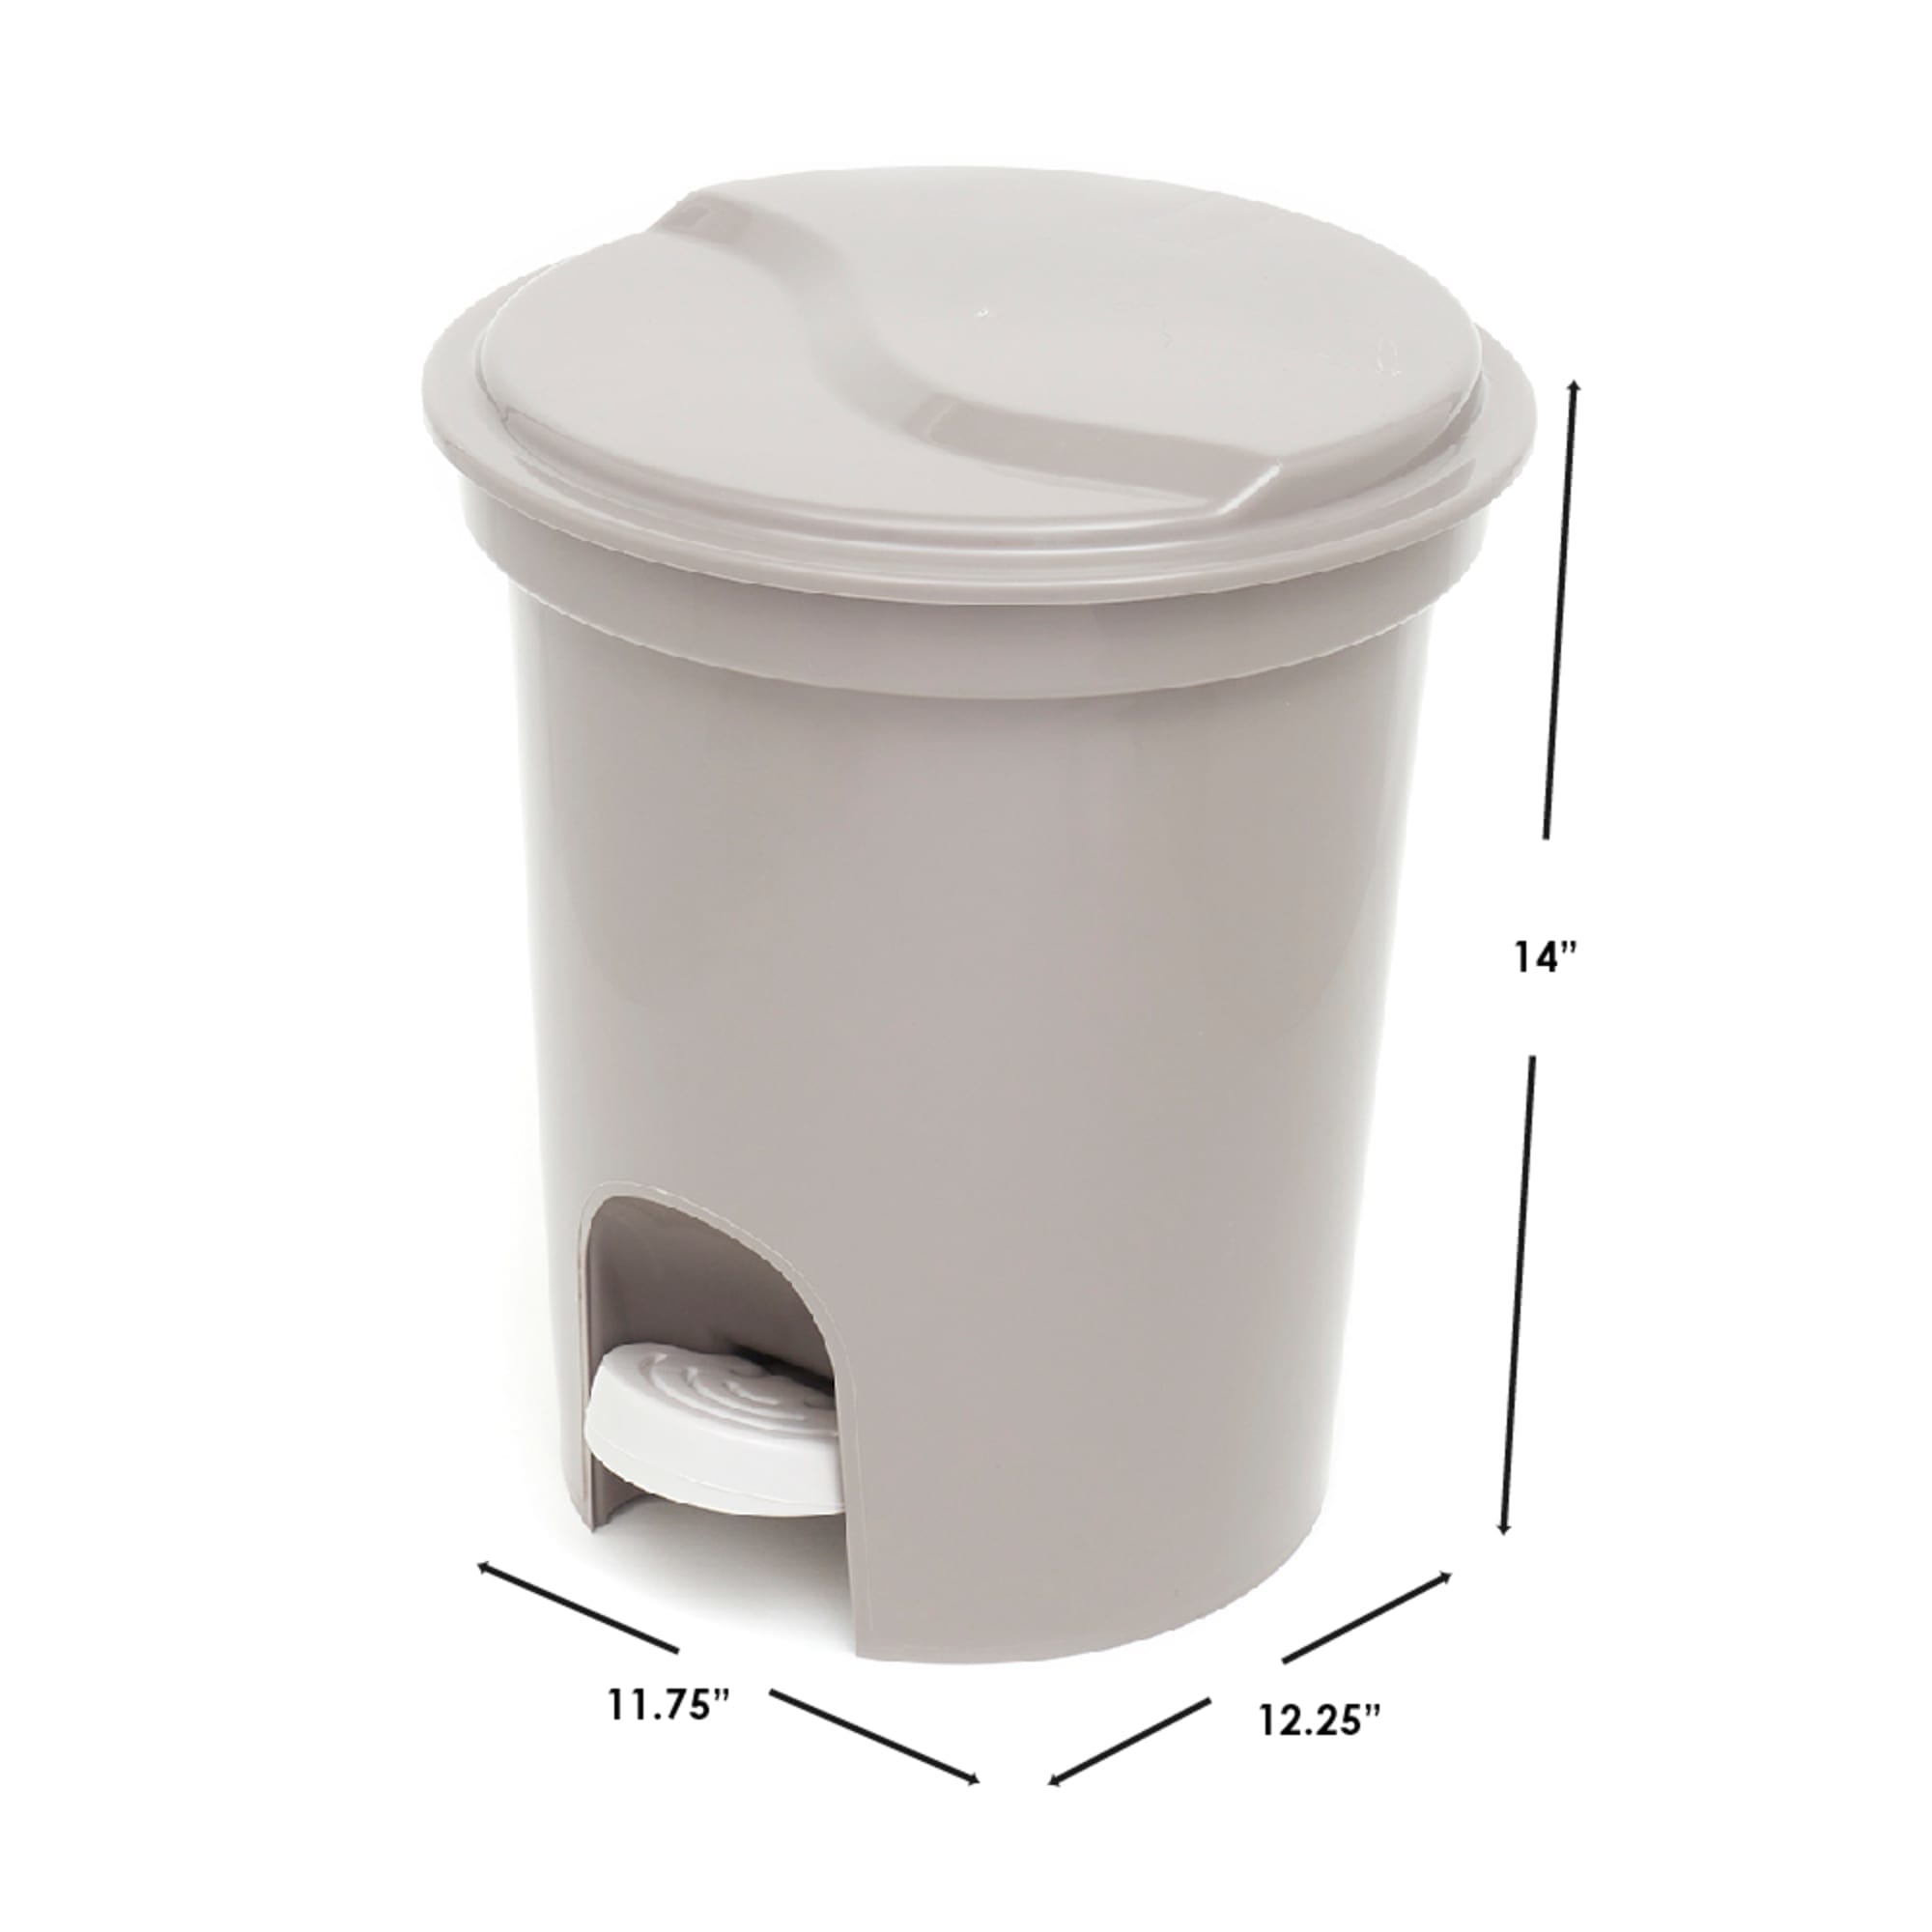 Home Basics 13 Liter Plastic Step on Waste Bin, Grey $8 EACH, CASE PACK OF 6